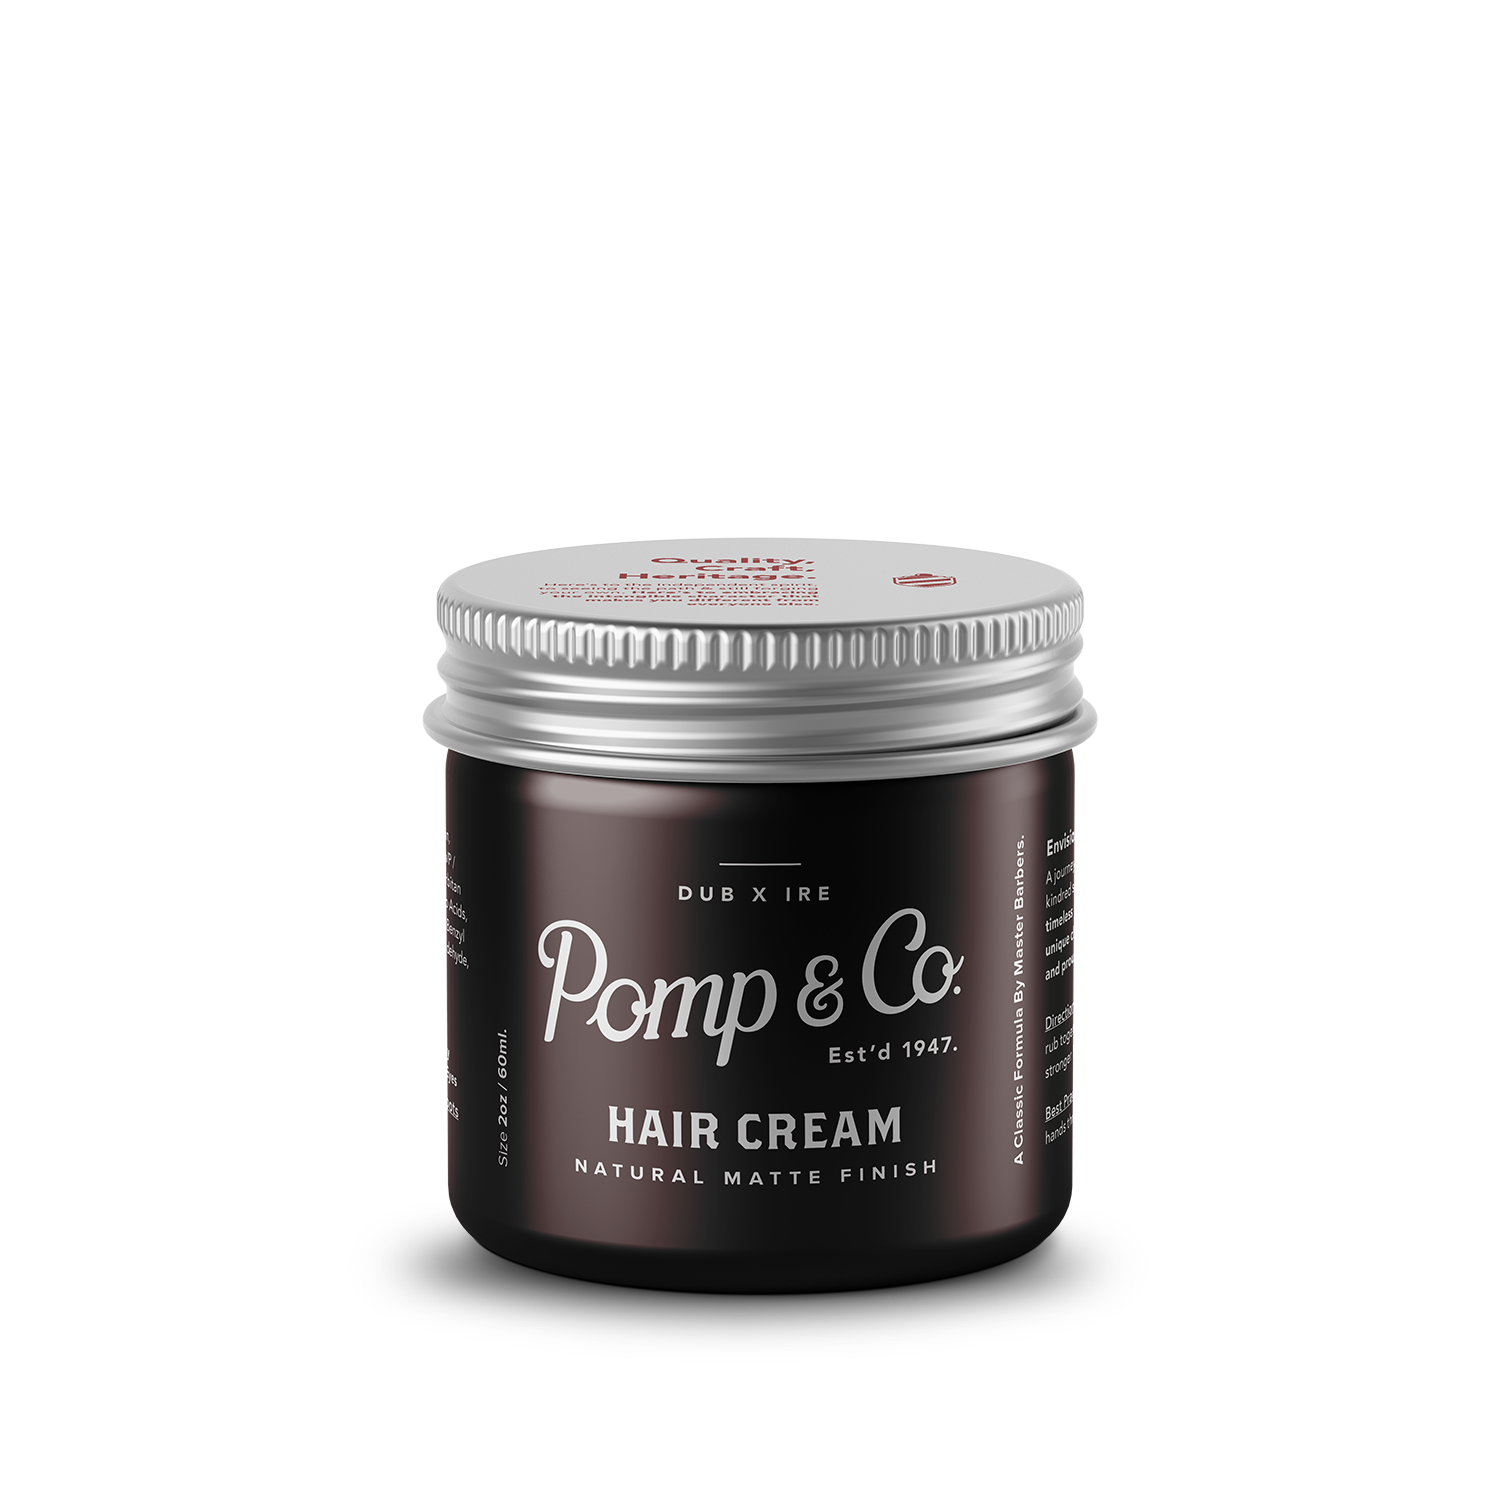 Pomp & Co's Hair Cream